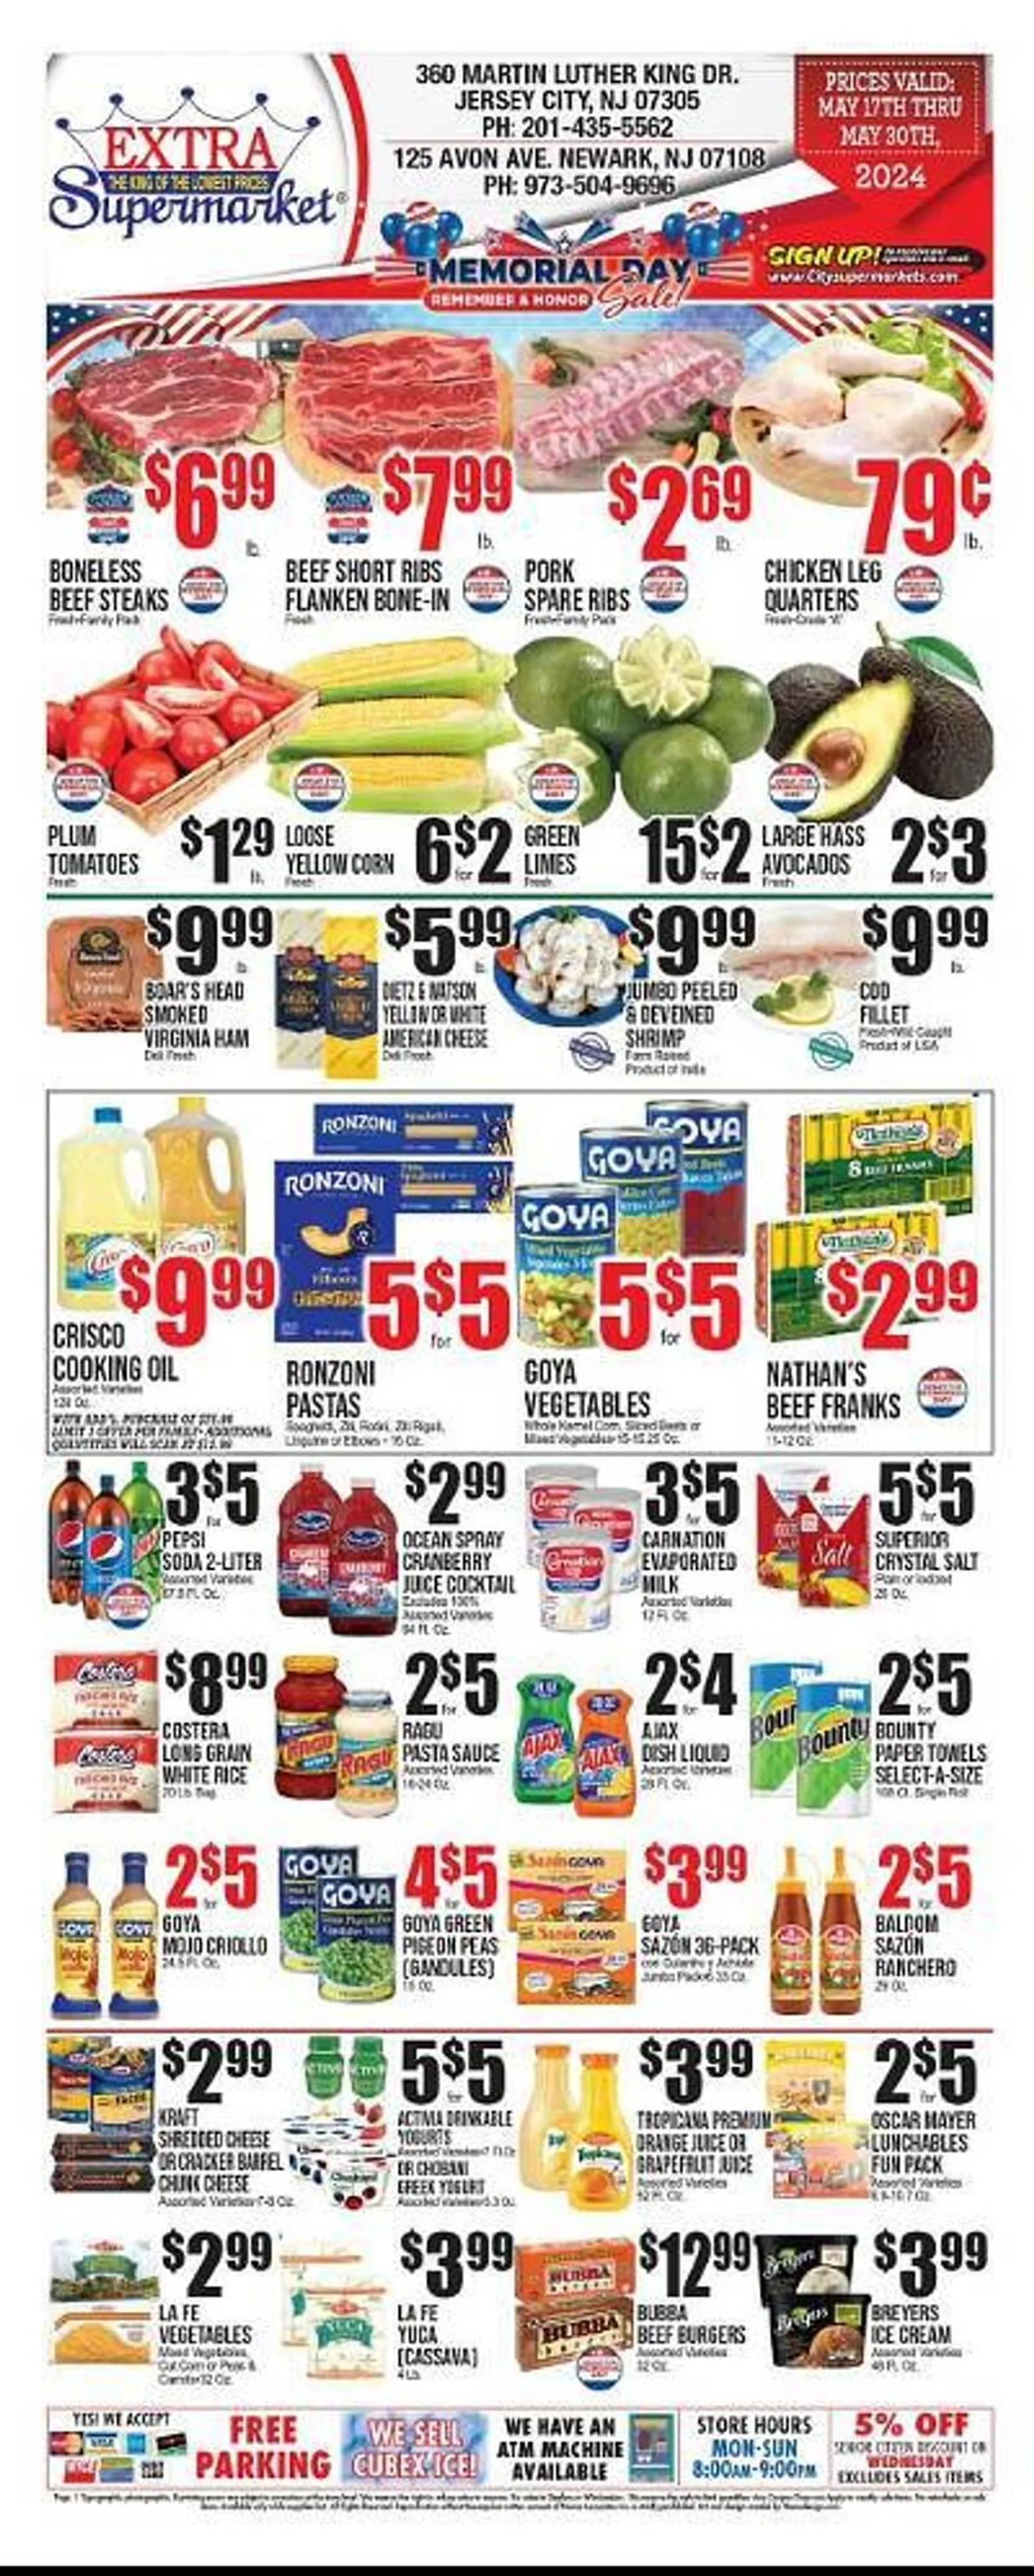 Extra Supermarket Weekly Ad - 1